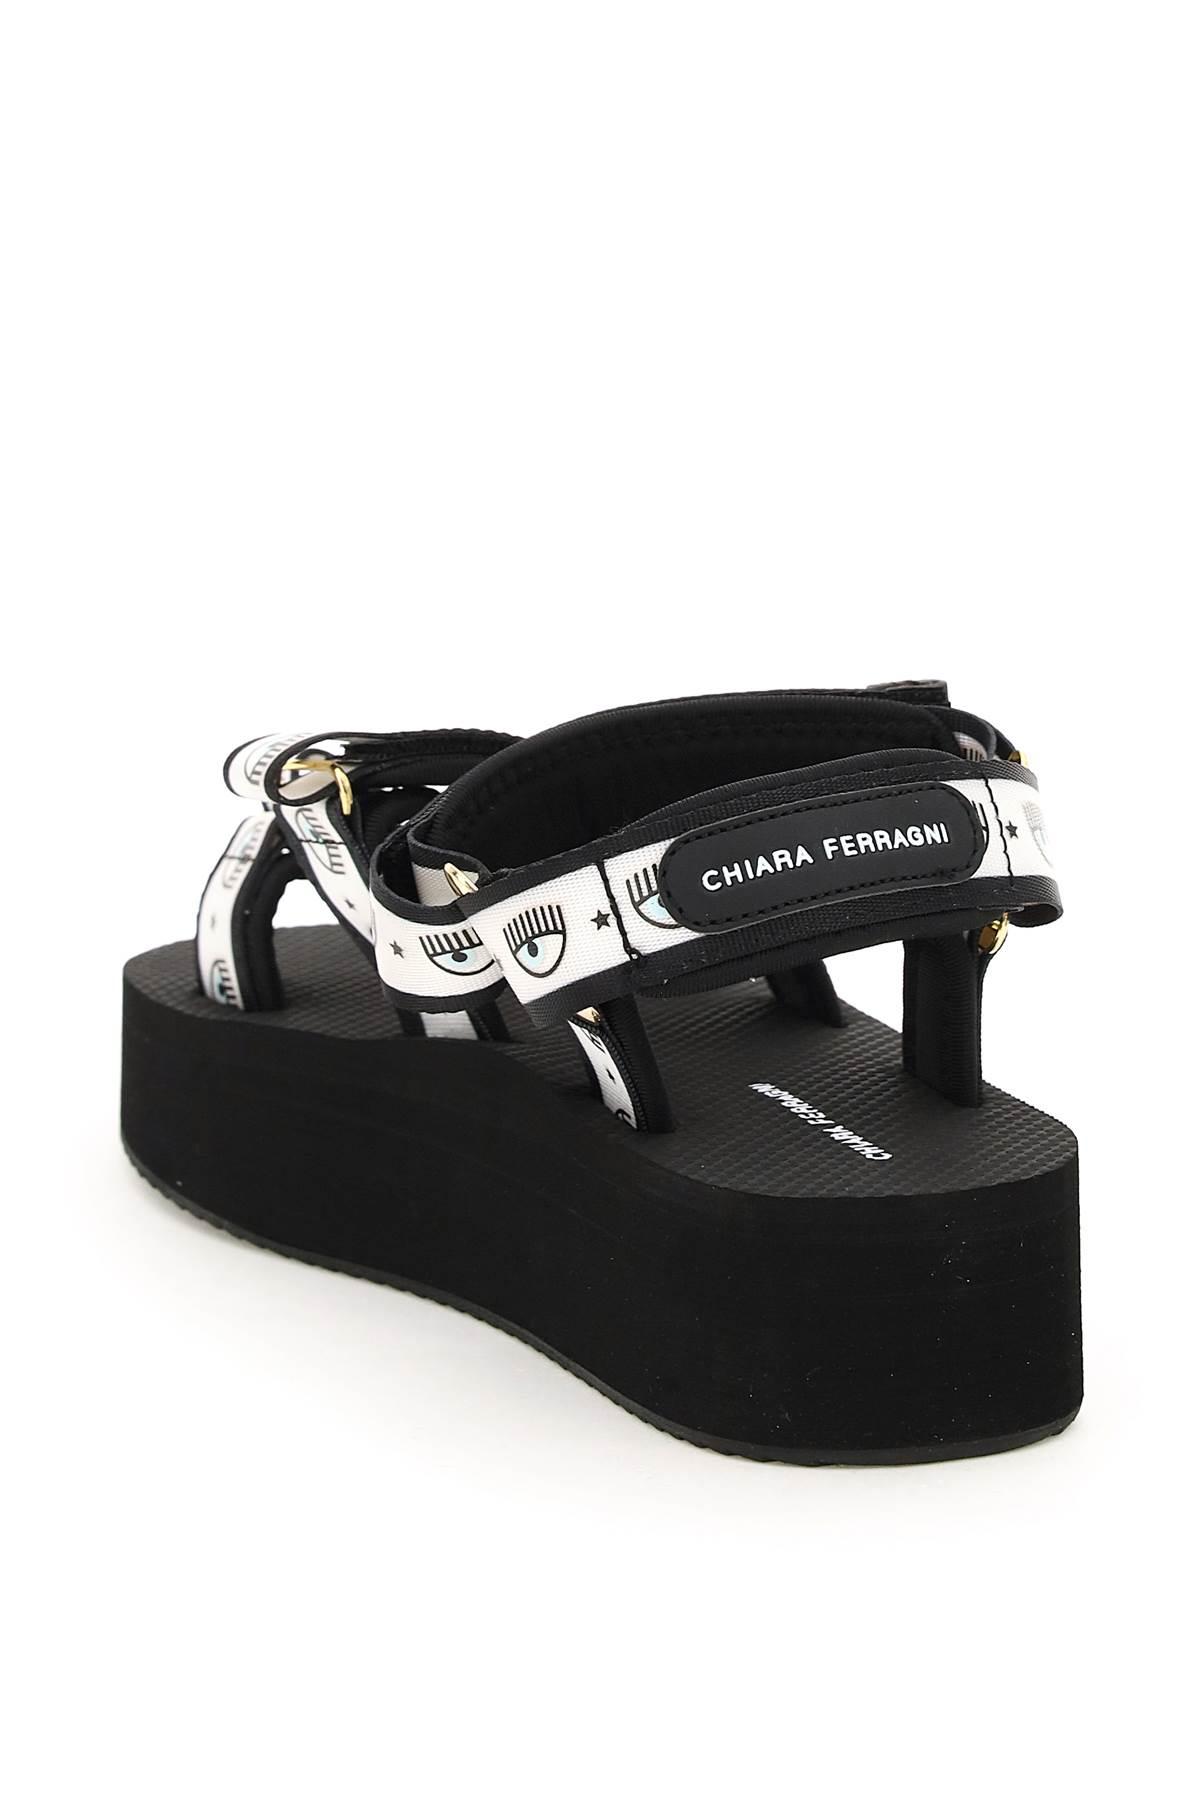 Chiara Ferragni Logomania Sandals in Black | Lyst